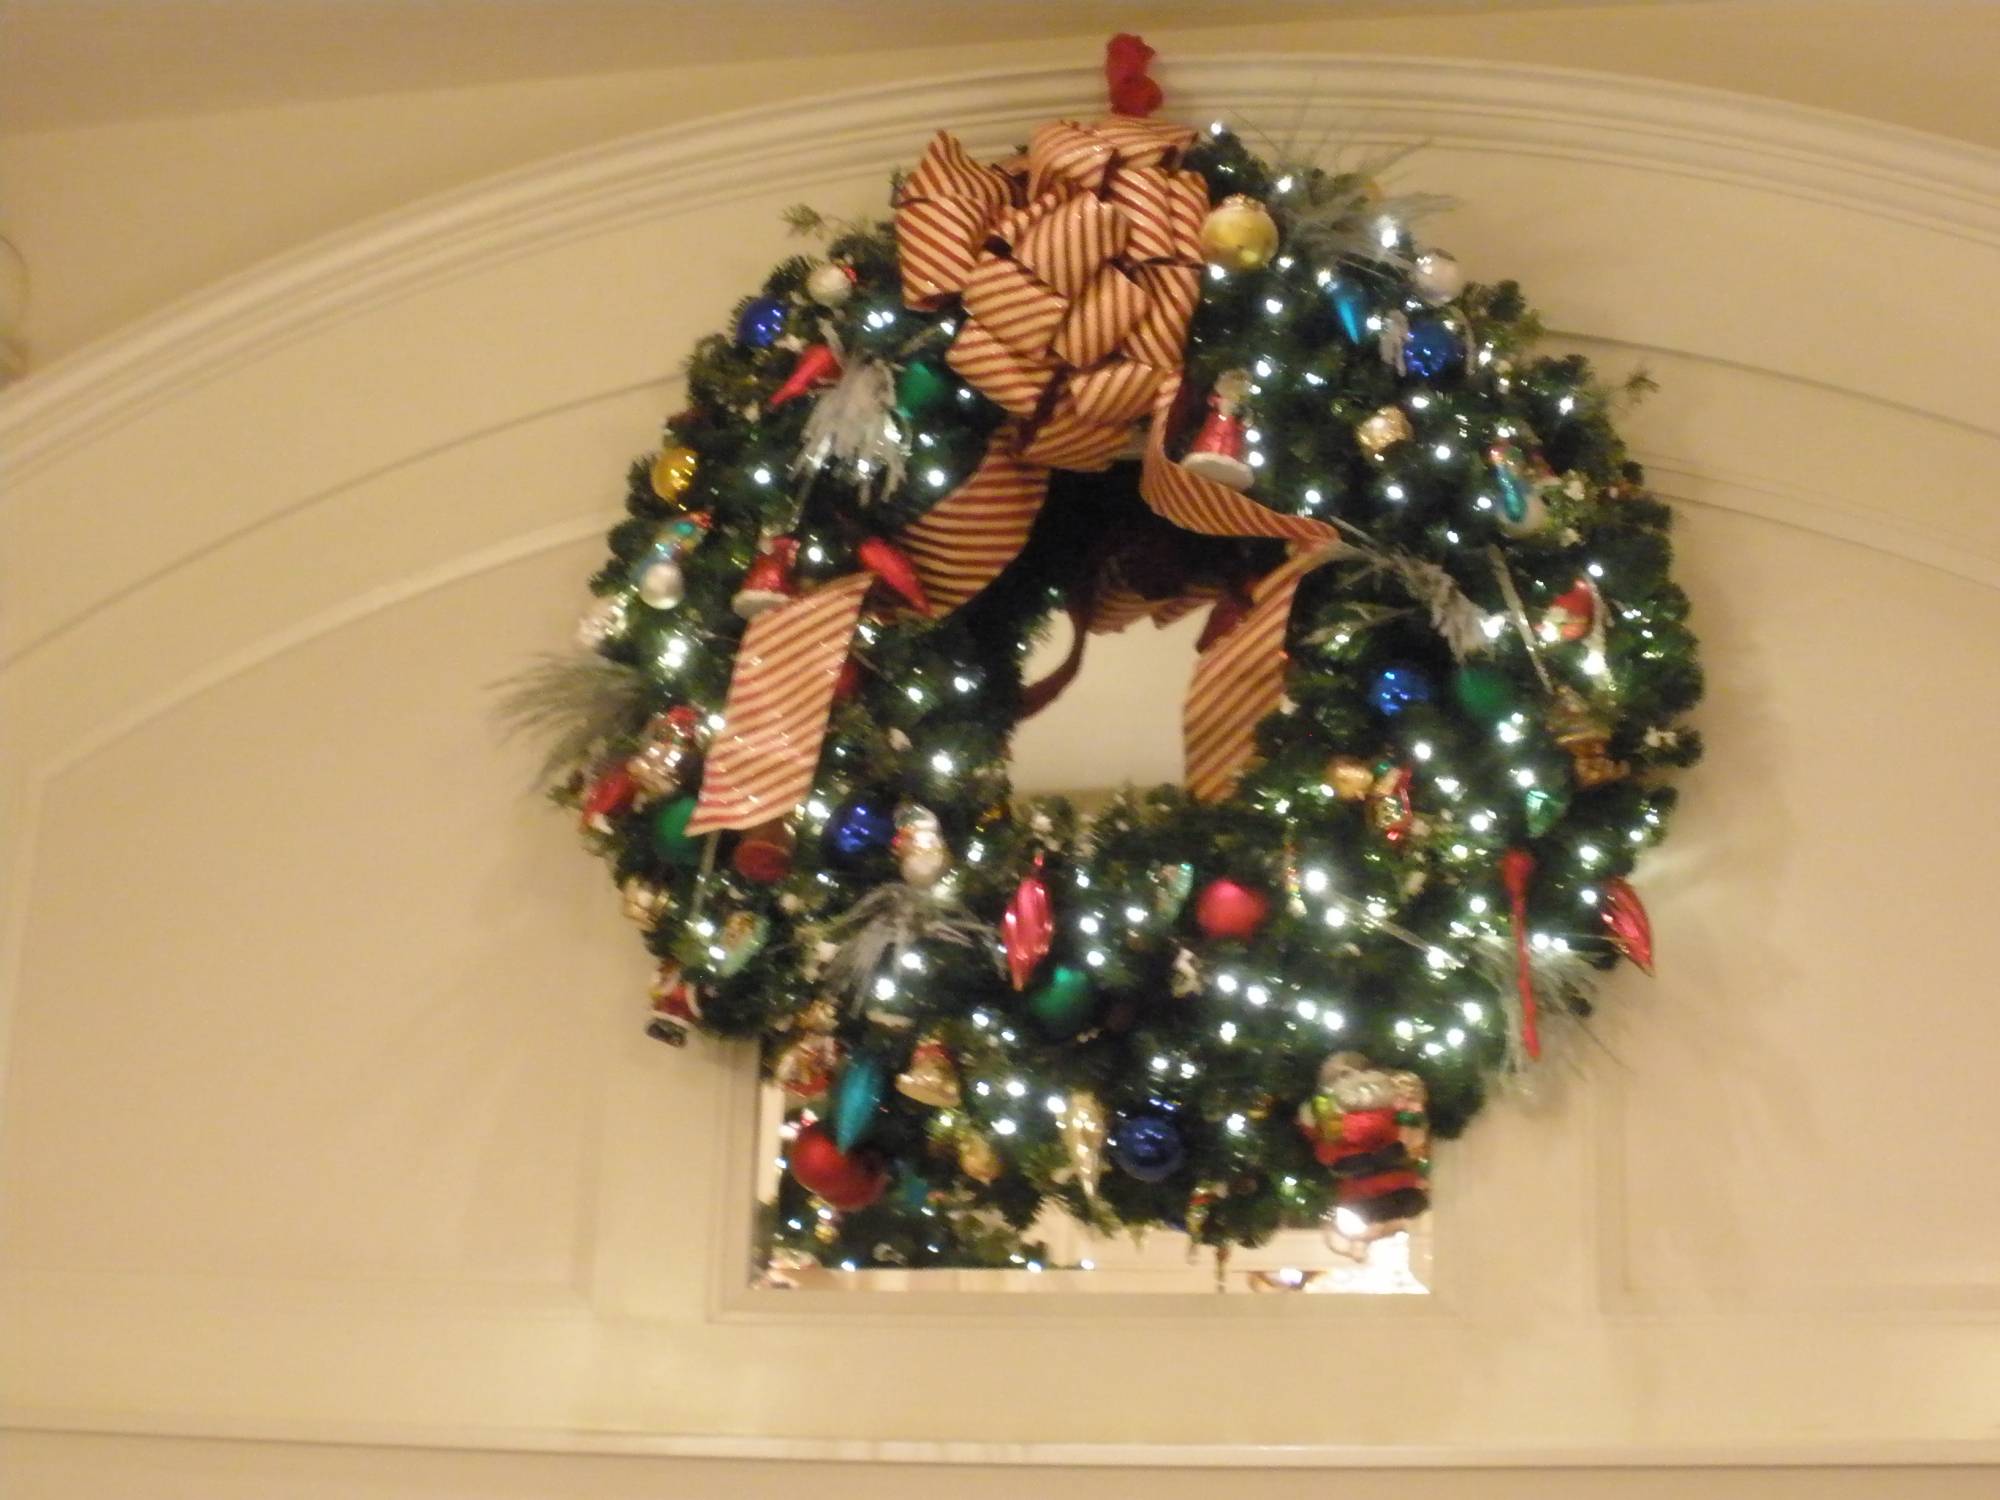 Boardwalk Inn Christmas wreath